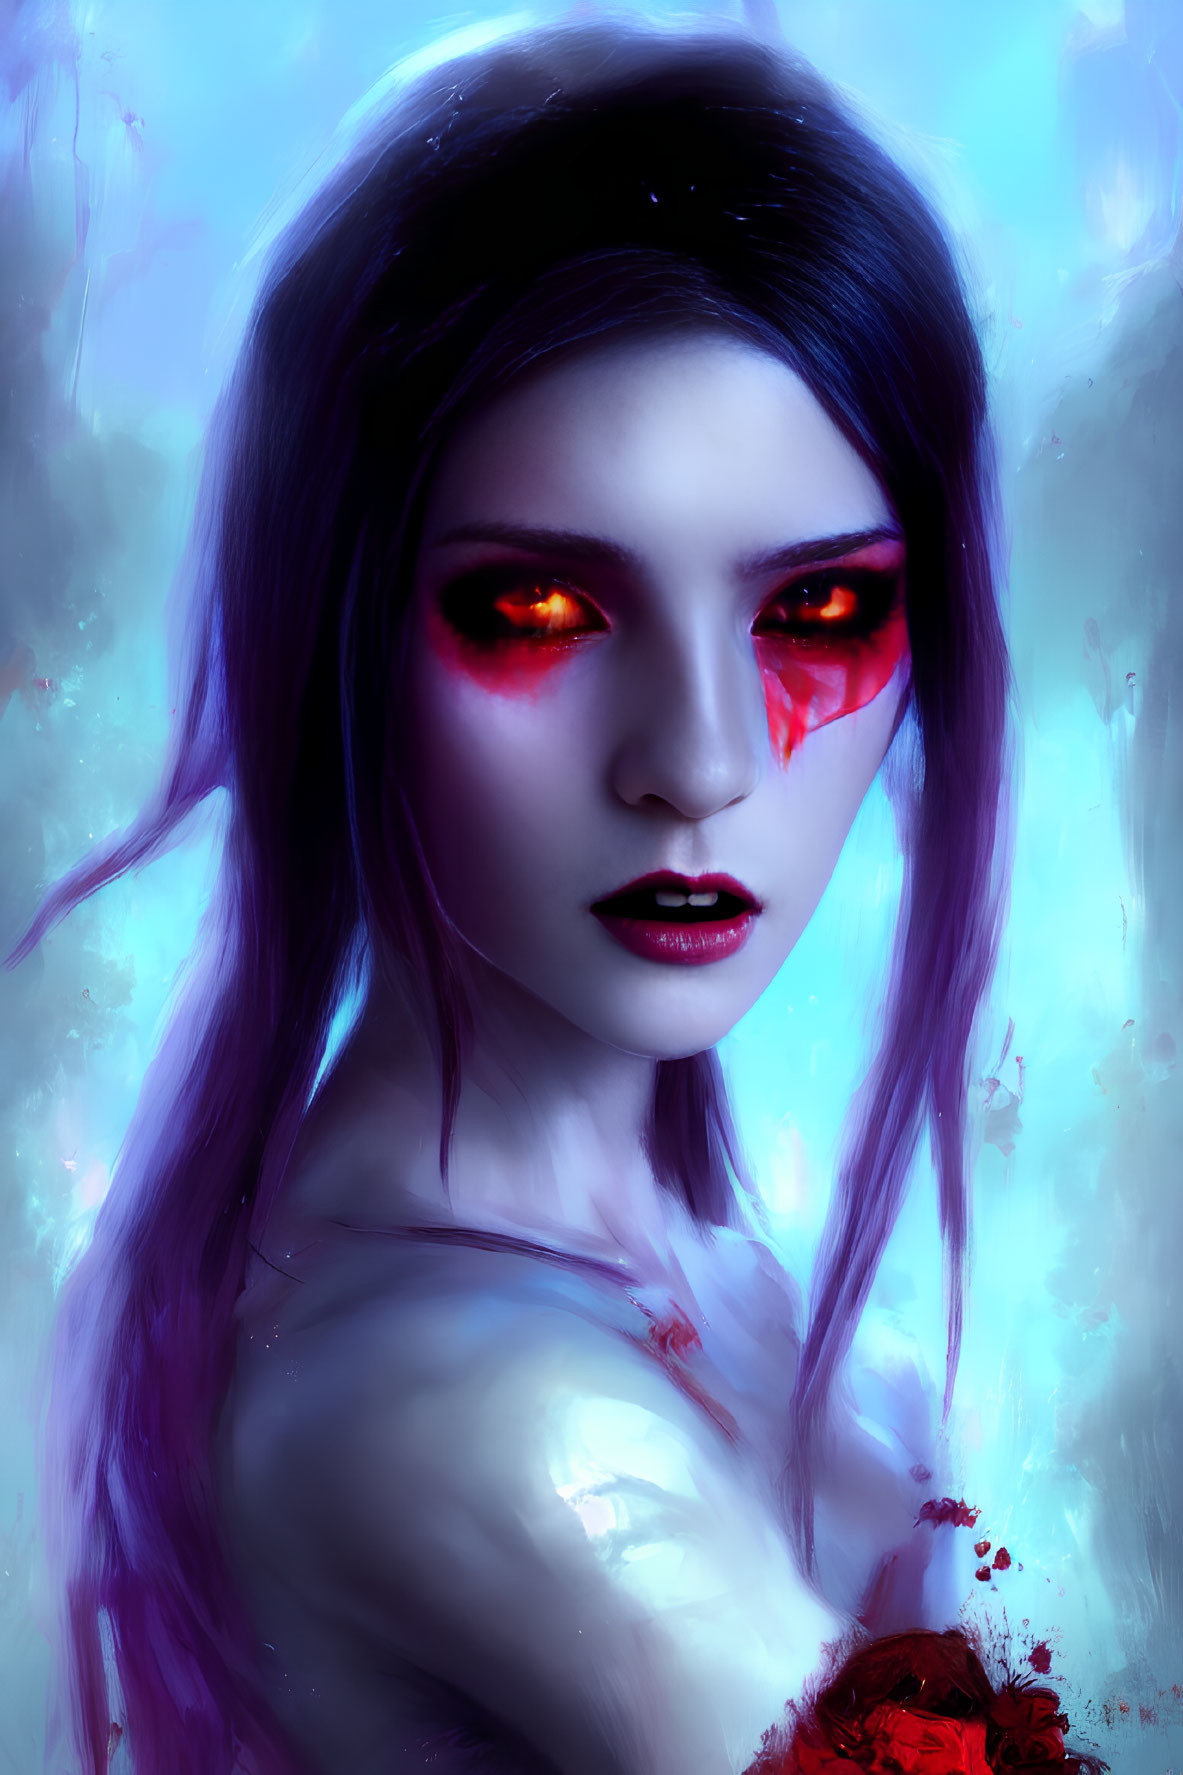 Digital portrait of female figure with glowing red eyes and dark hair against bluish-purple background